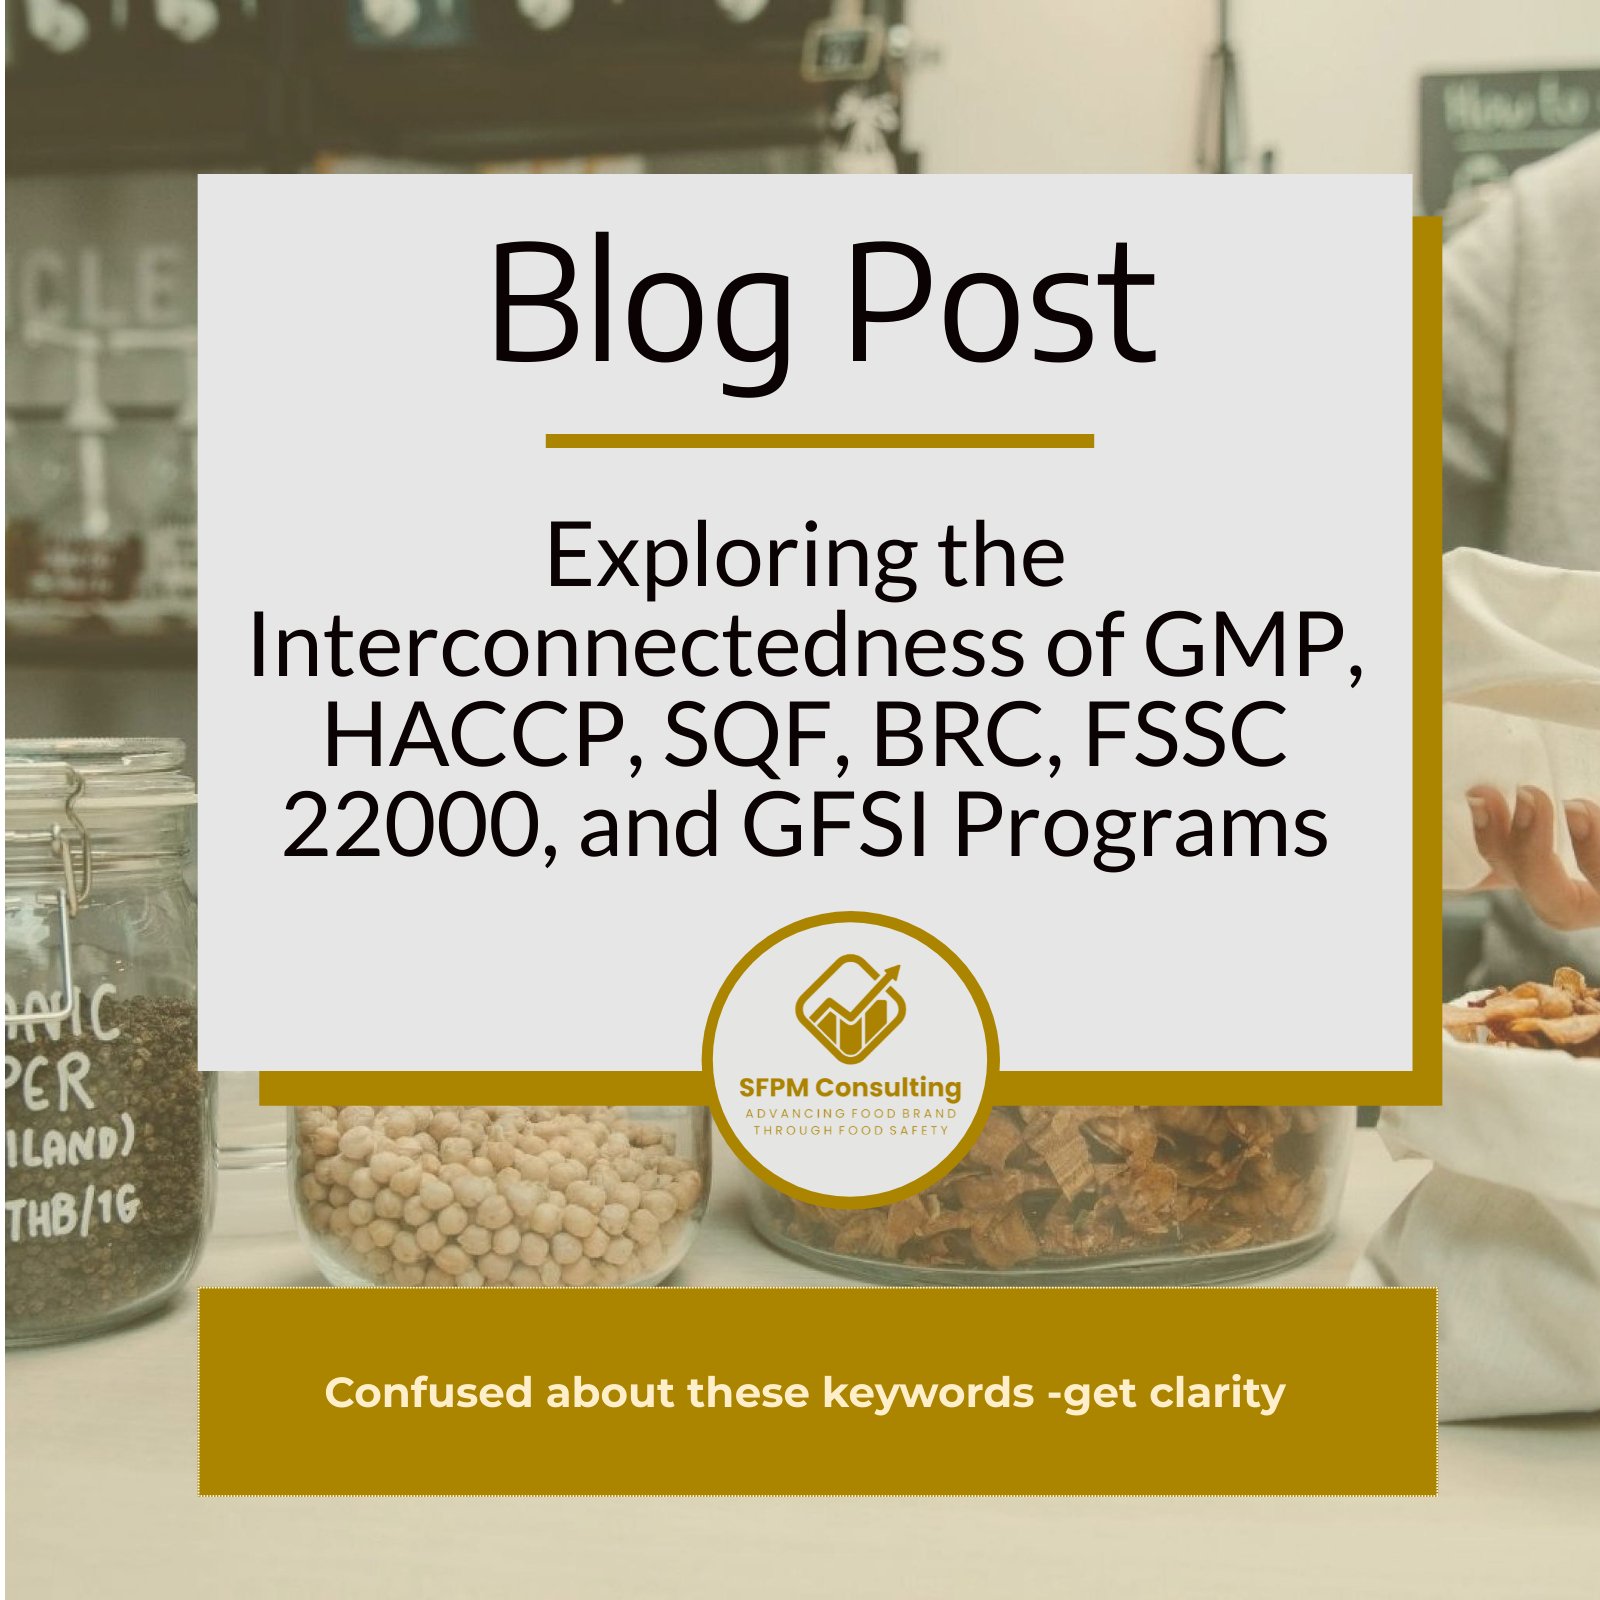 SFPM Consulting present Exploring the Interconnectedness of GMP, HACCP, SQF, BRC, FSSC 22000, and GFSI Programs blog.